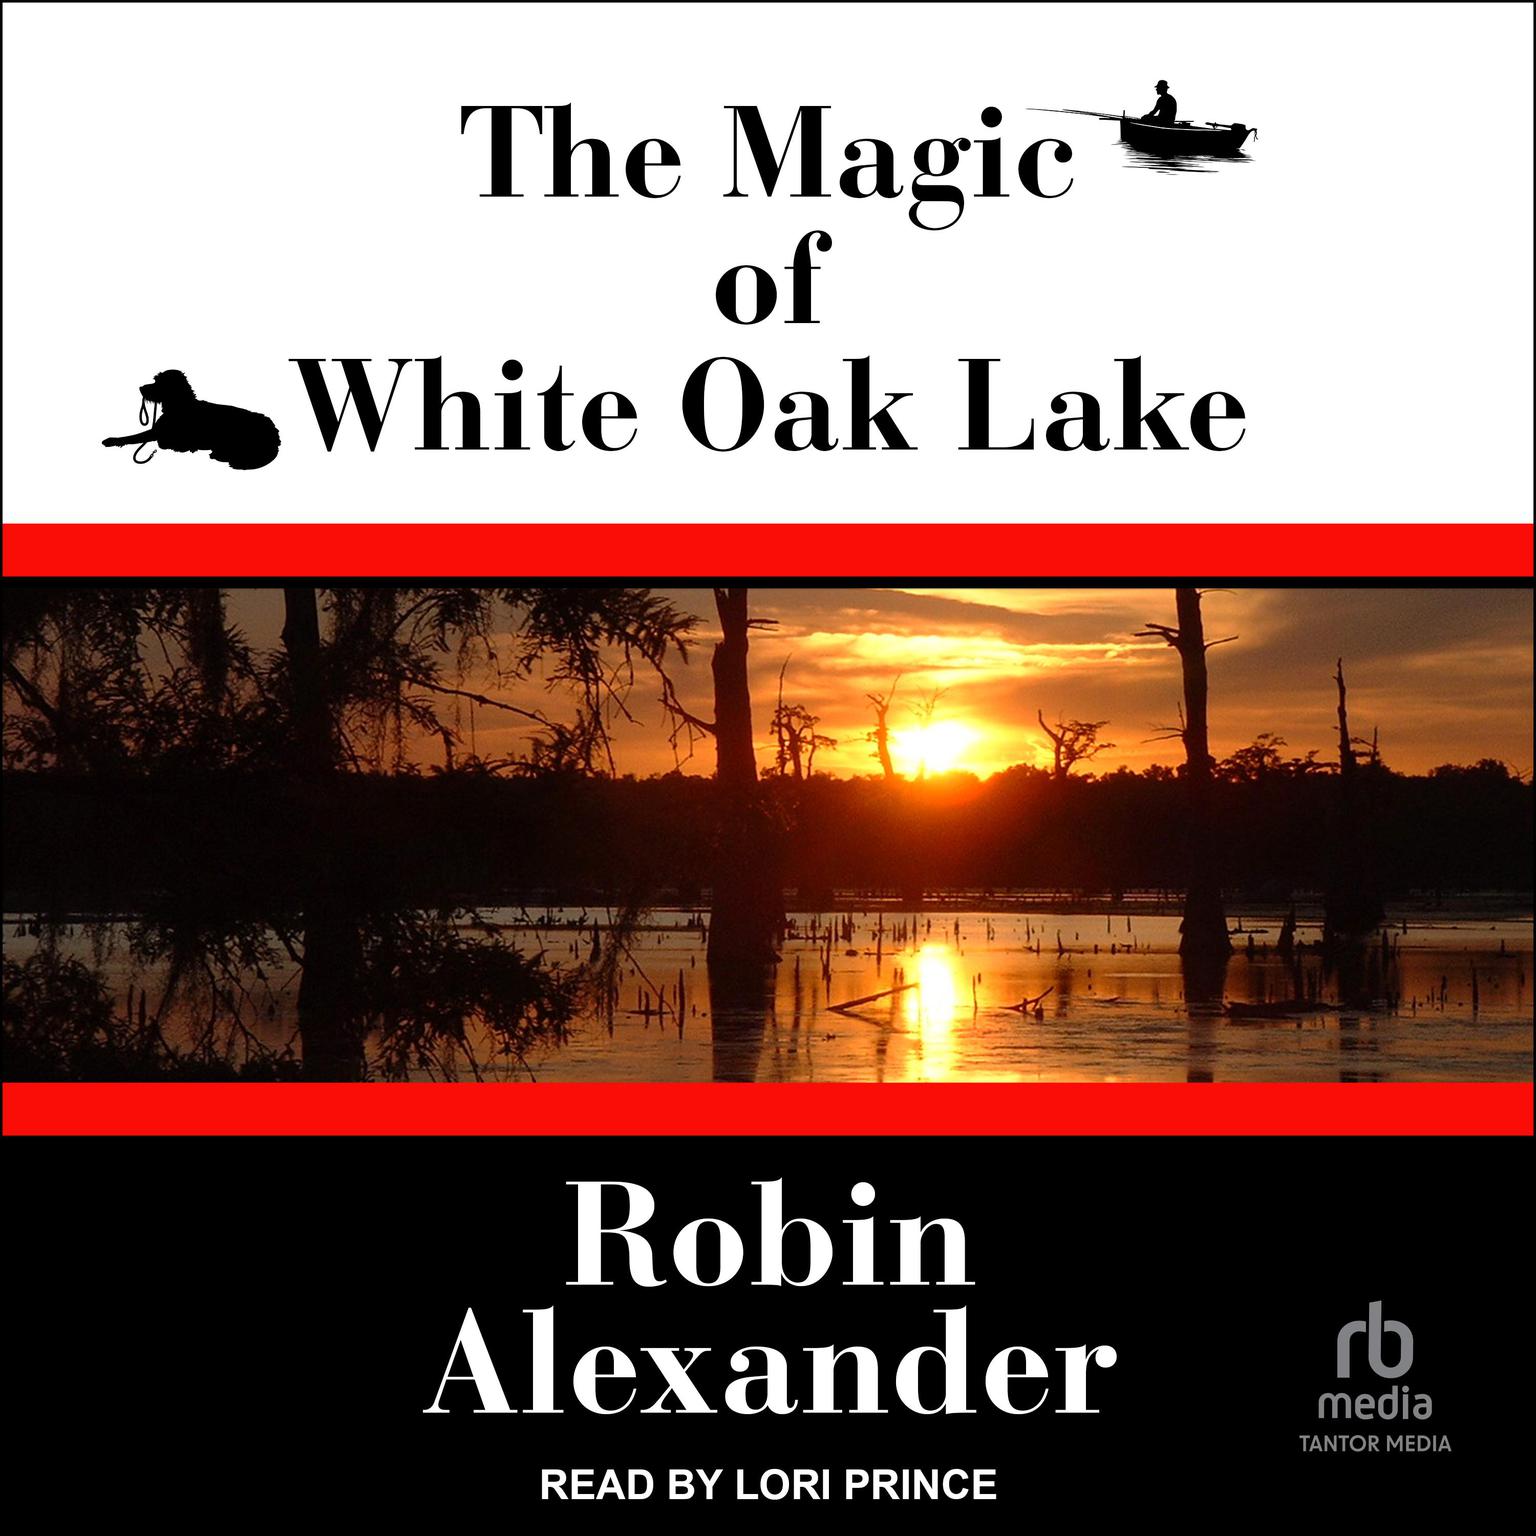 The Magic of White Oak Lake Audiobook, by Robin Alexander